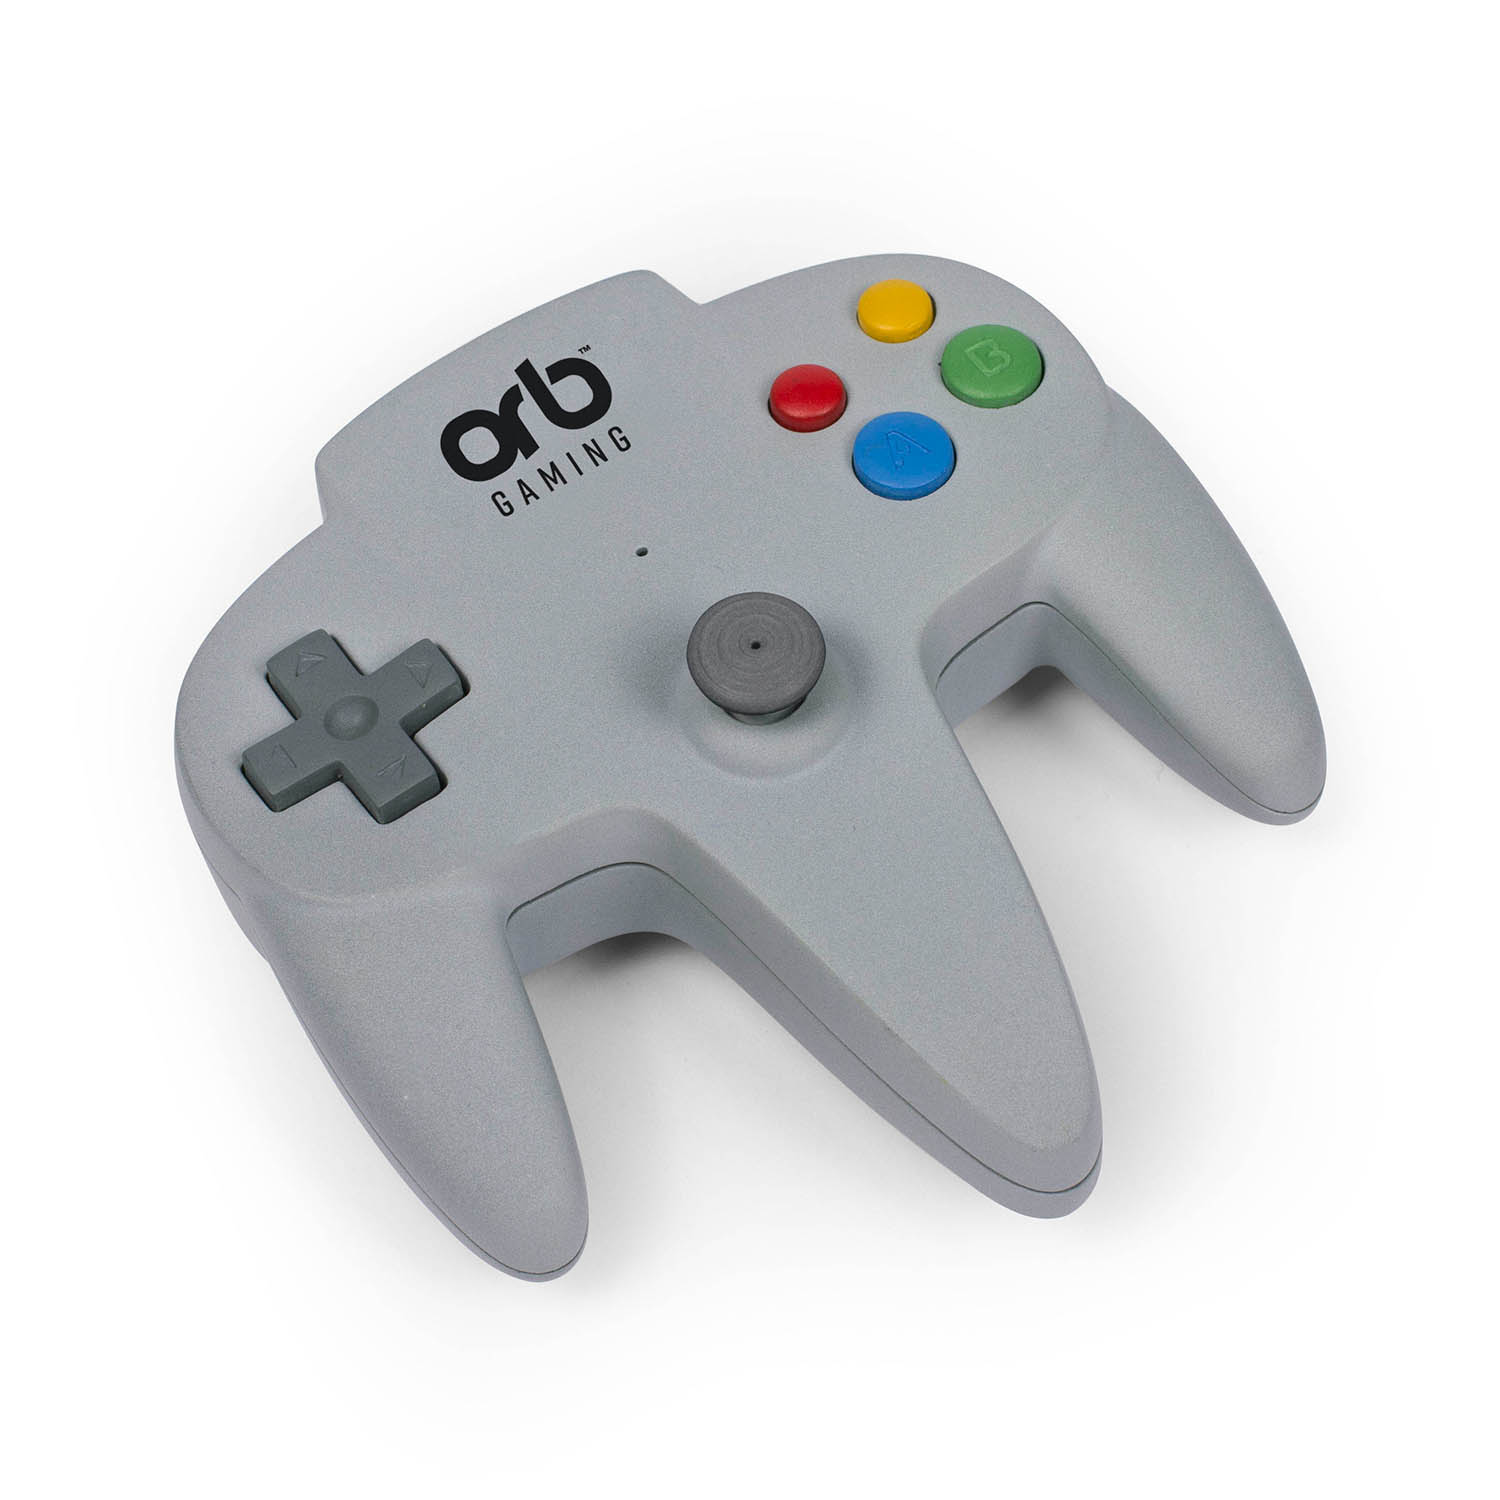 ORB Retro Arcade grau TV Spielen 8-bit 200x Controller Games -inkl